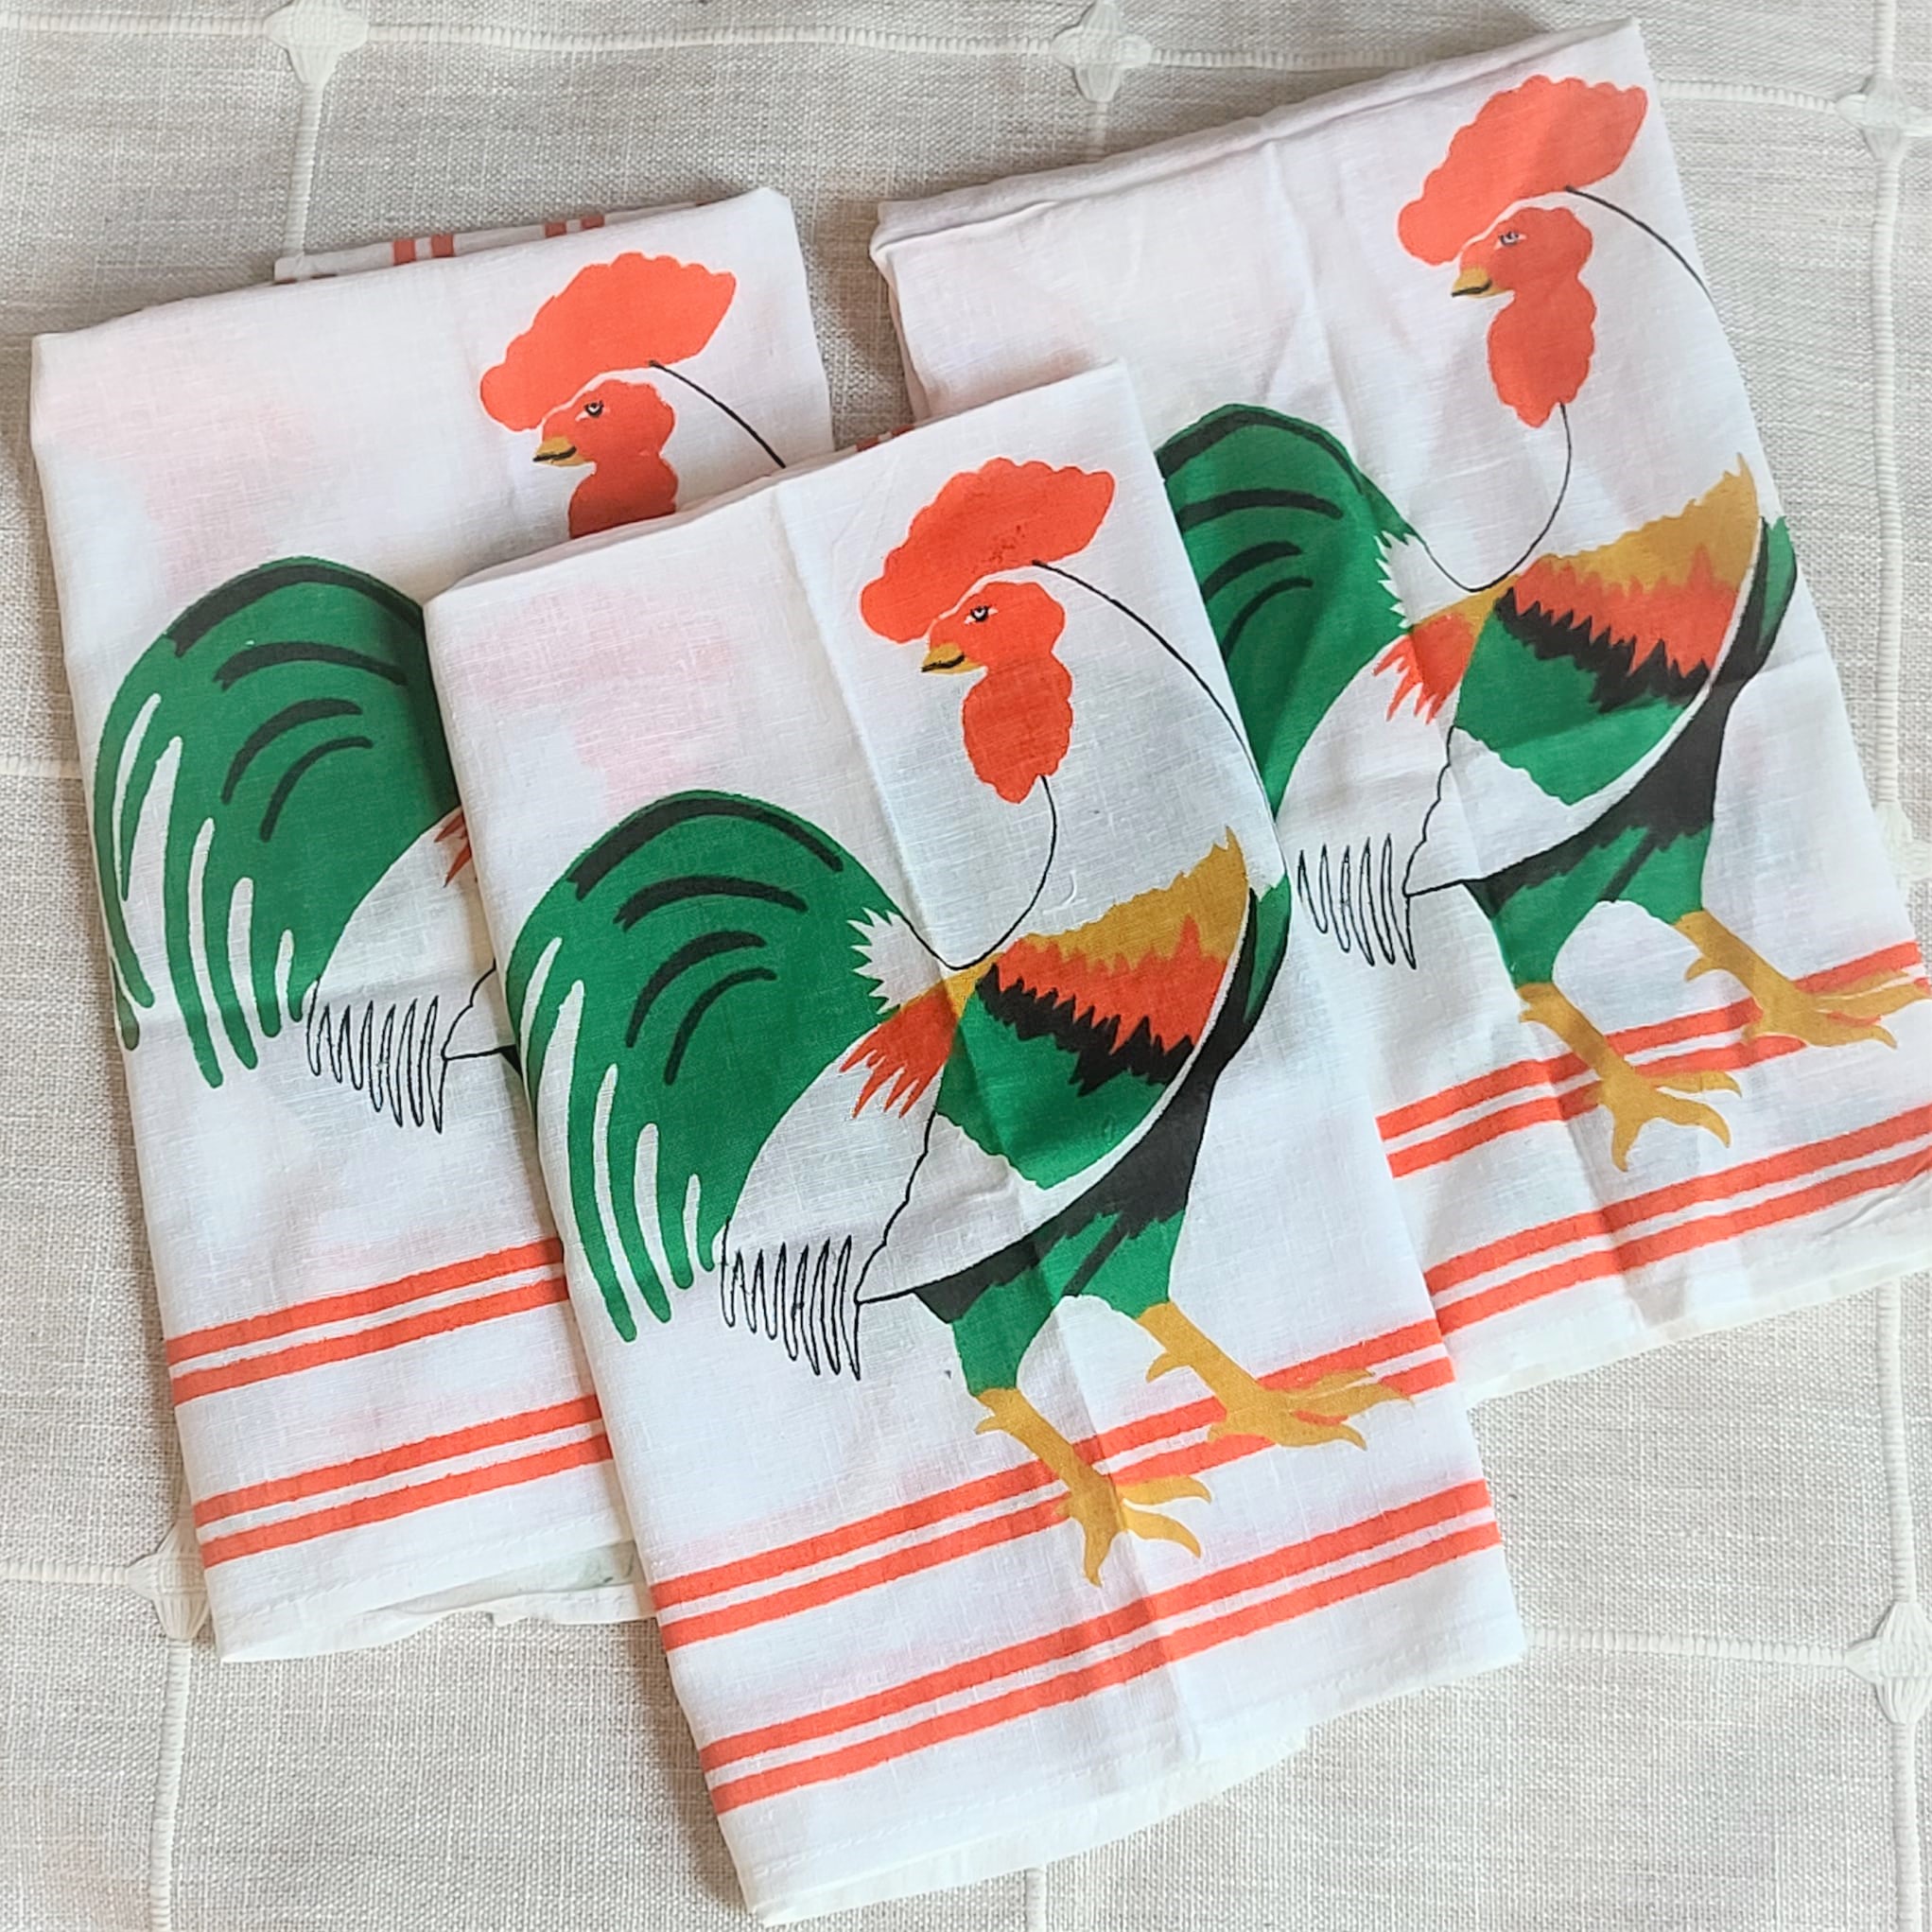 Vintage set of 3 tea towels - Rooster pattern